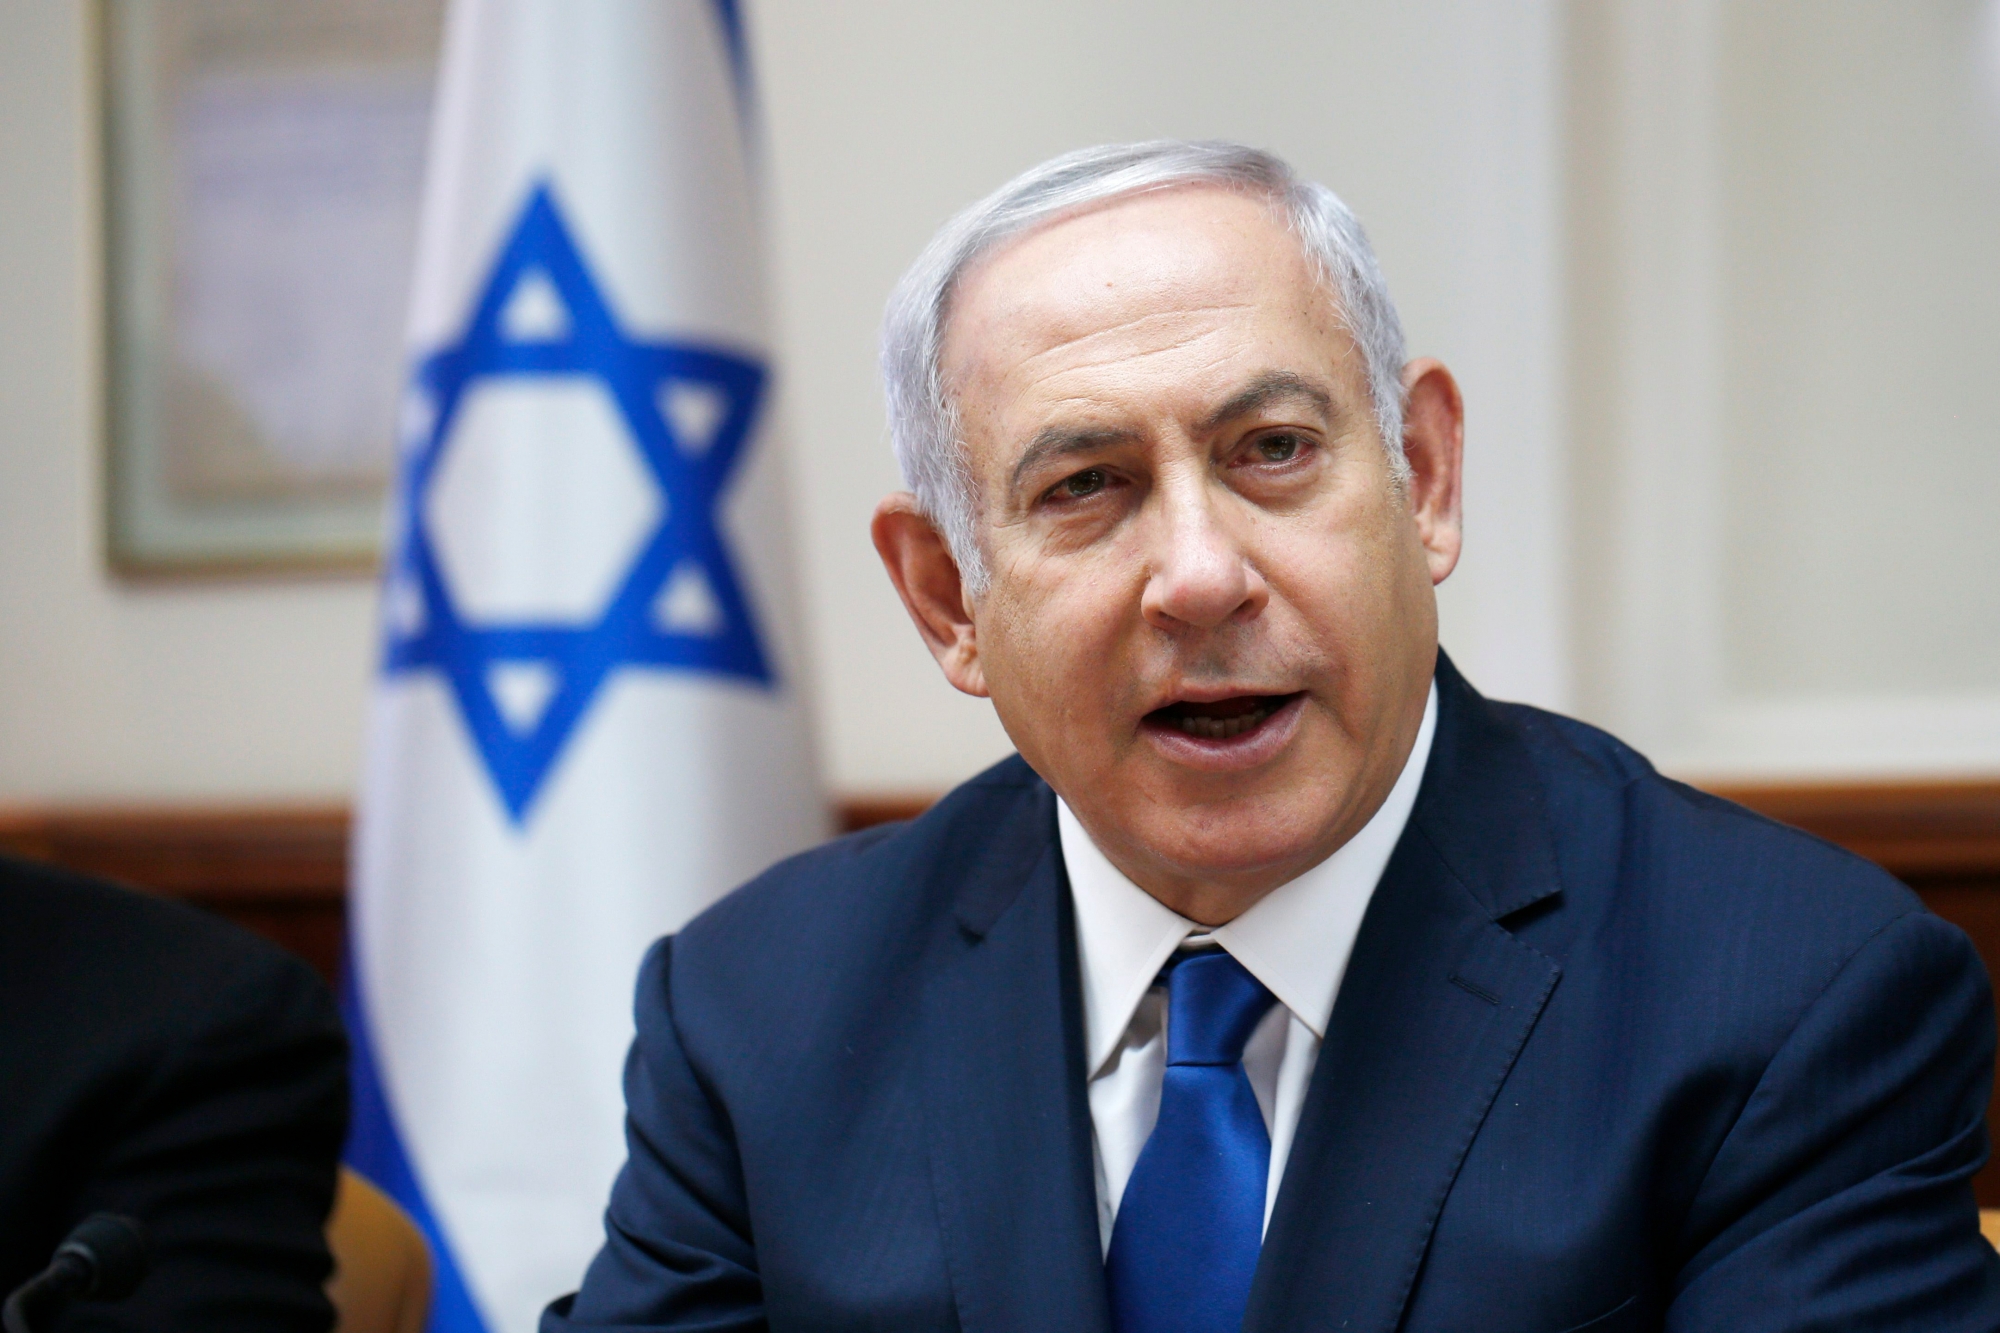 Israeli Prime Minister Benjamin Netanyahu attends the weekly cabinet meeting at his office in Jerusalem, Sunday, July 15, 2018. (Ronen Zvulun/Pool Photo via AP) Israel Netanyahu